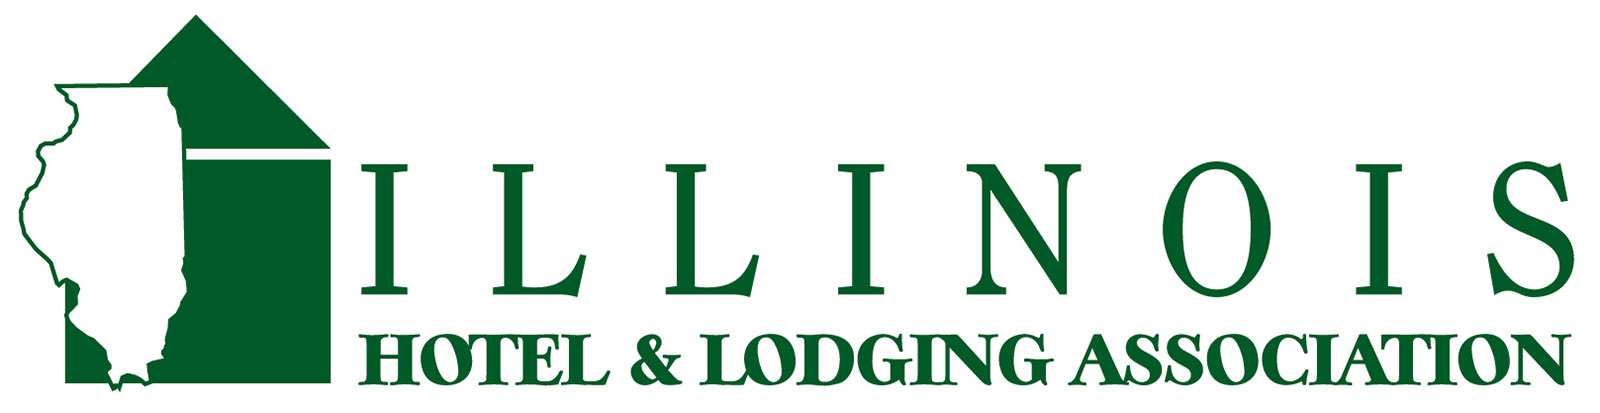 Illinois Hotel & Lodging Association logo